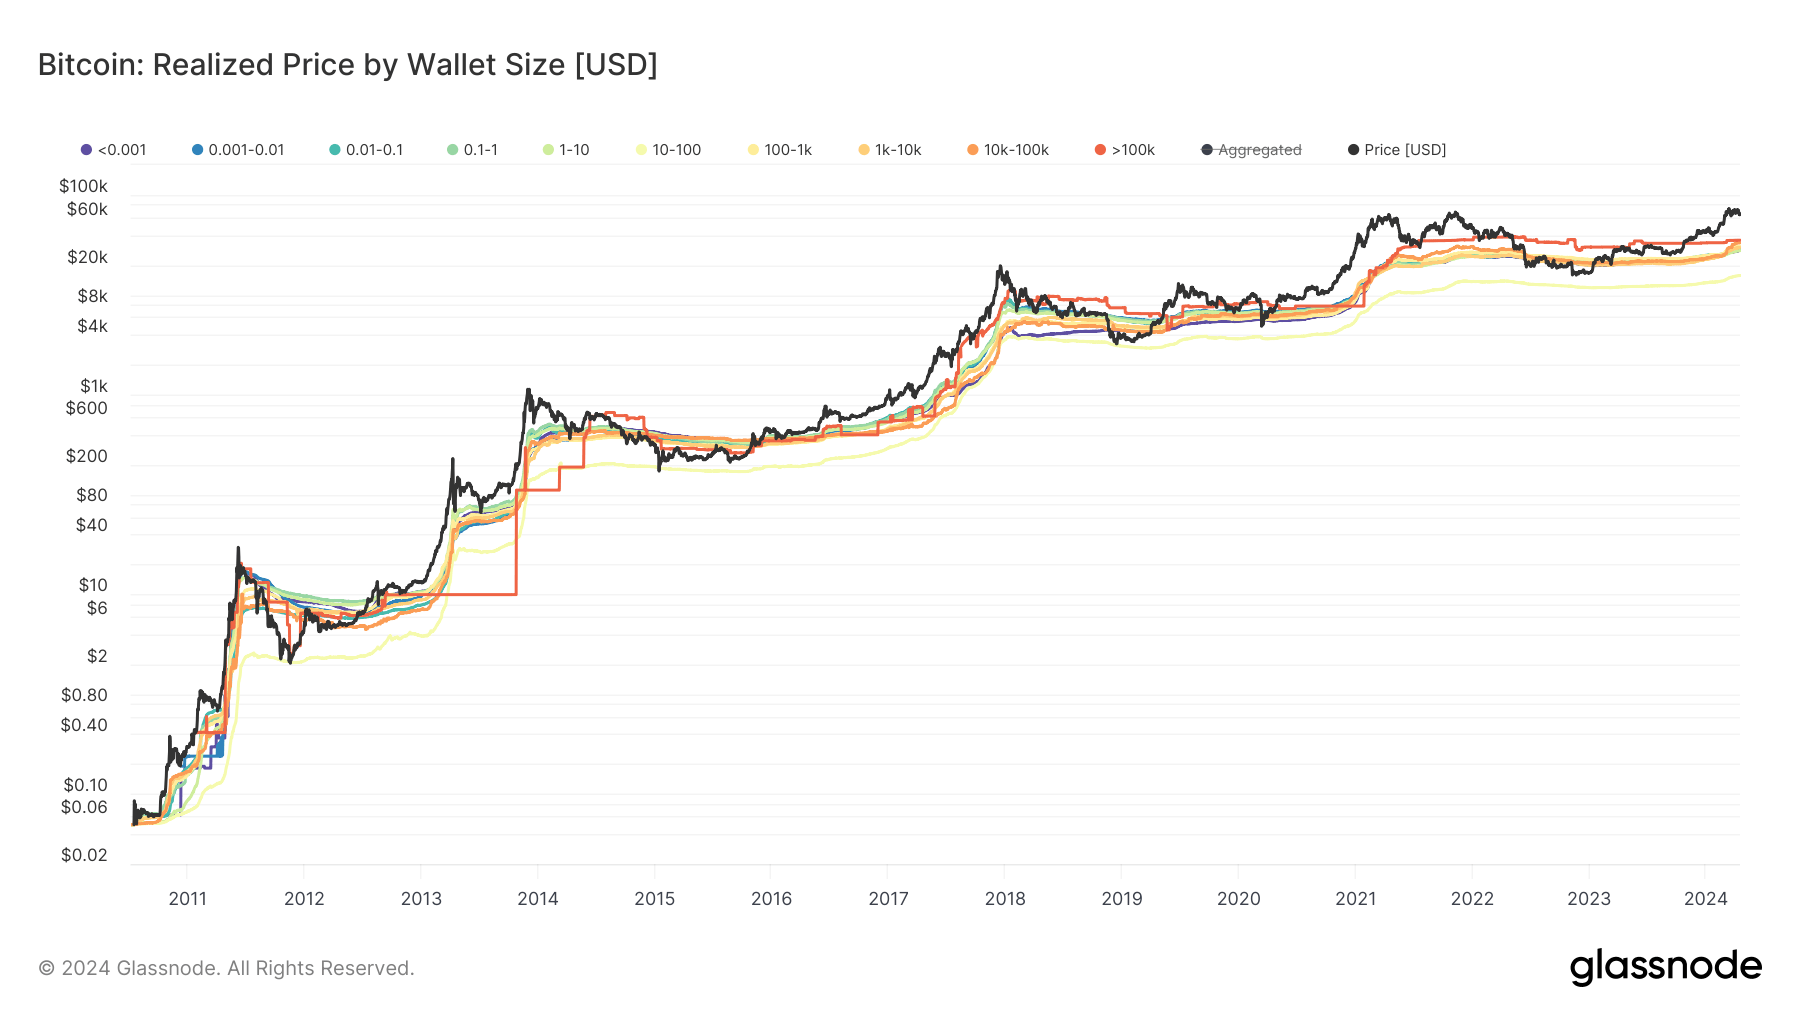 Bitcoin merealisasikan harga mengikut saiz dompet (Glassnode)